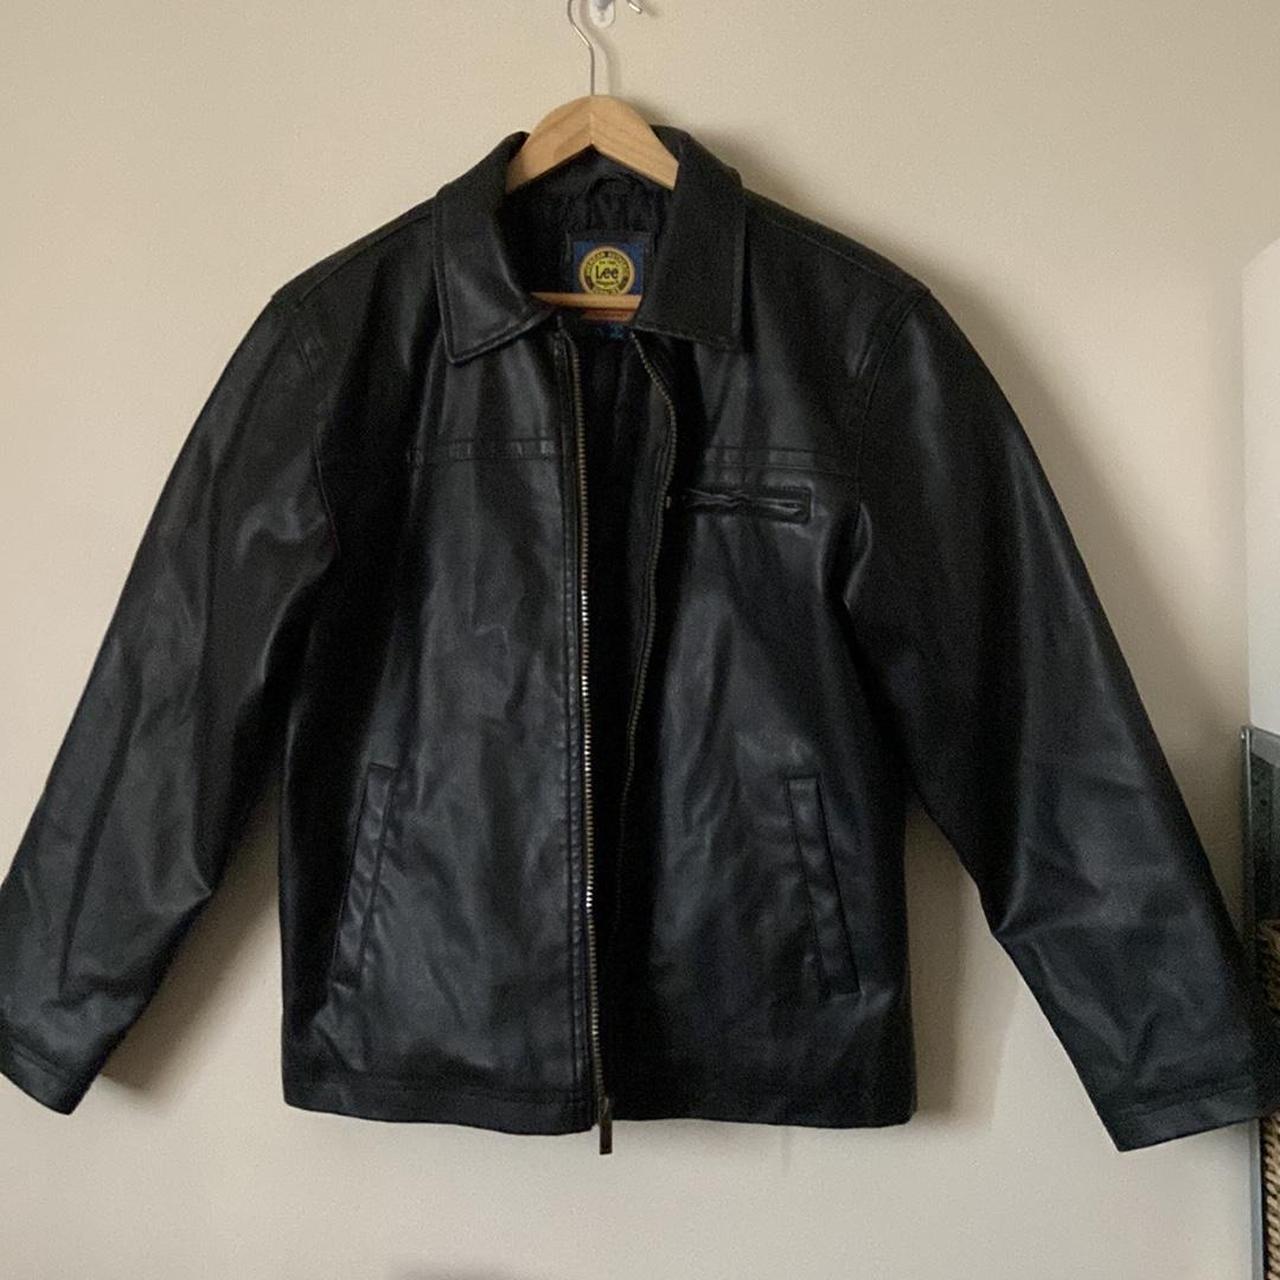 Vintage Lee Leather Jacket Rare Durable leather,... - Depop